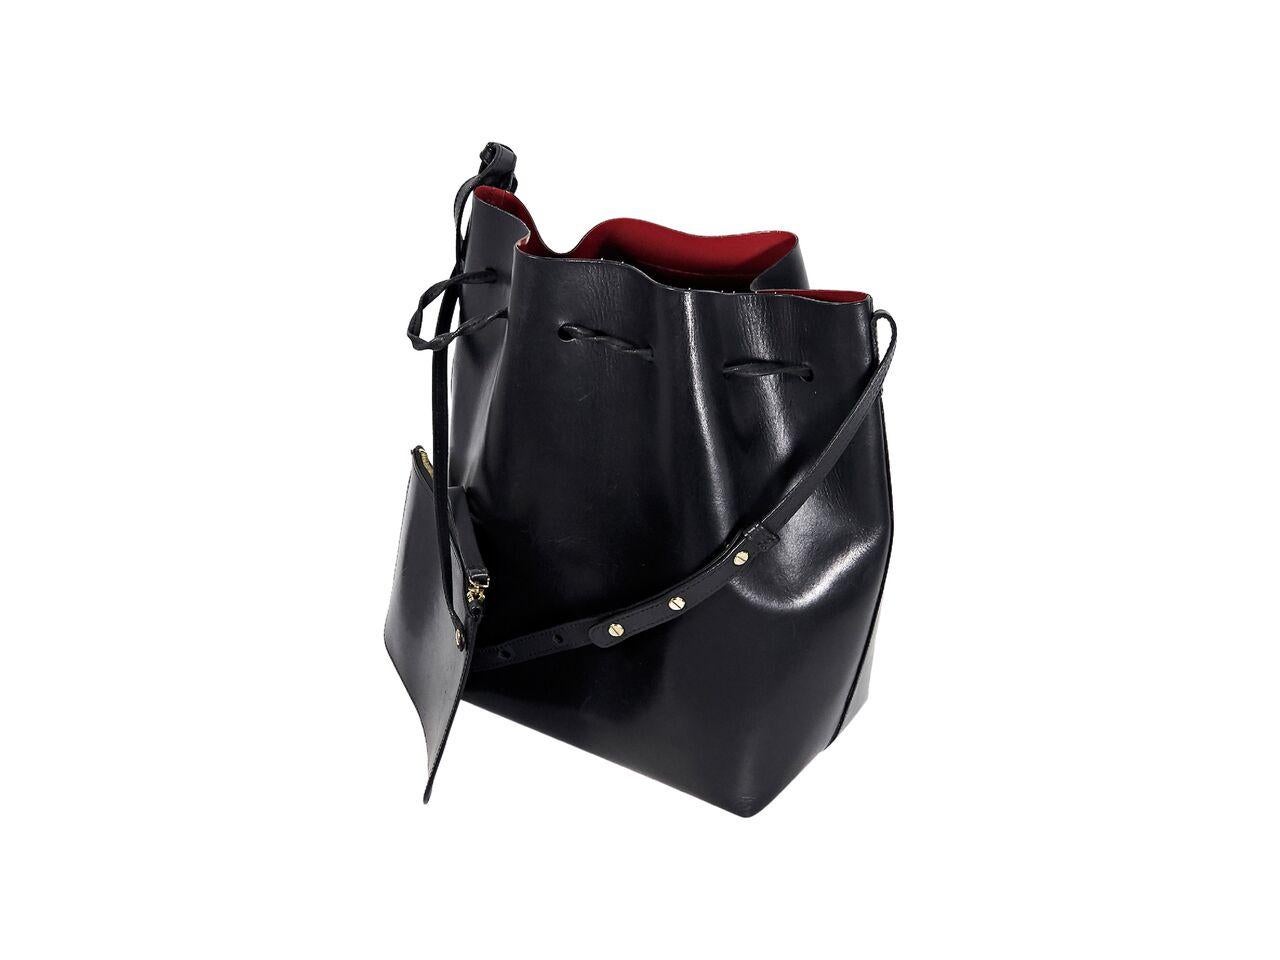 Product details:  Black leather bucket bag by Mansur Gavriel.  Adjustable shoulder strap.  Top drawstring closure.  Leather interior.  Detachable zip pouch.  Goldtone hardware.  Dust bag included.  15